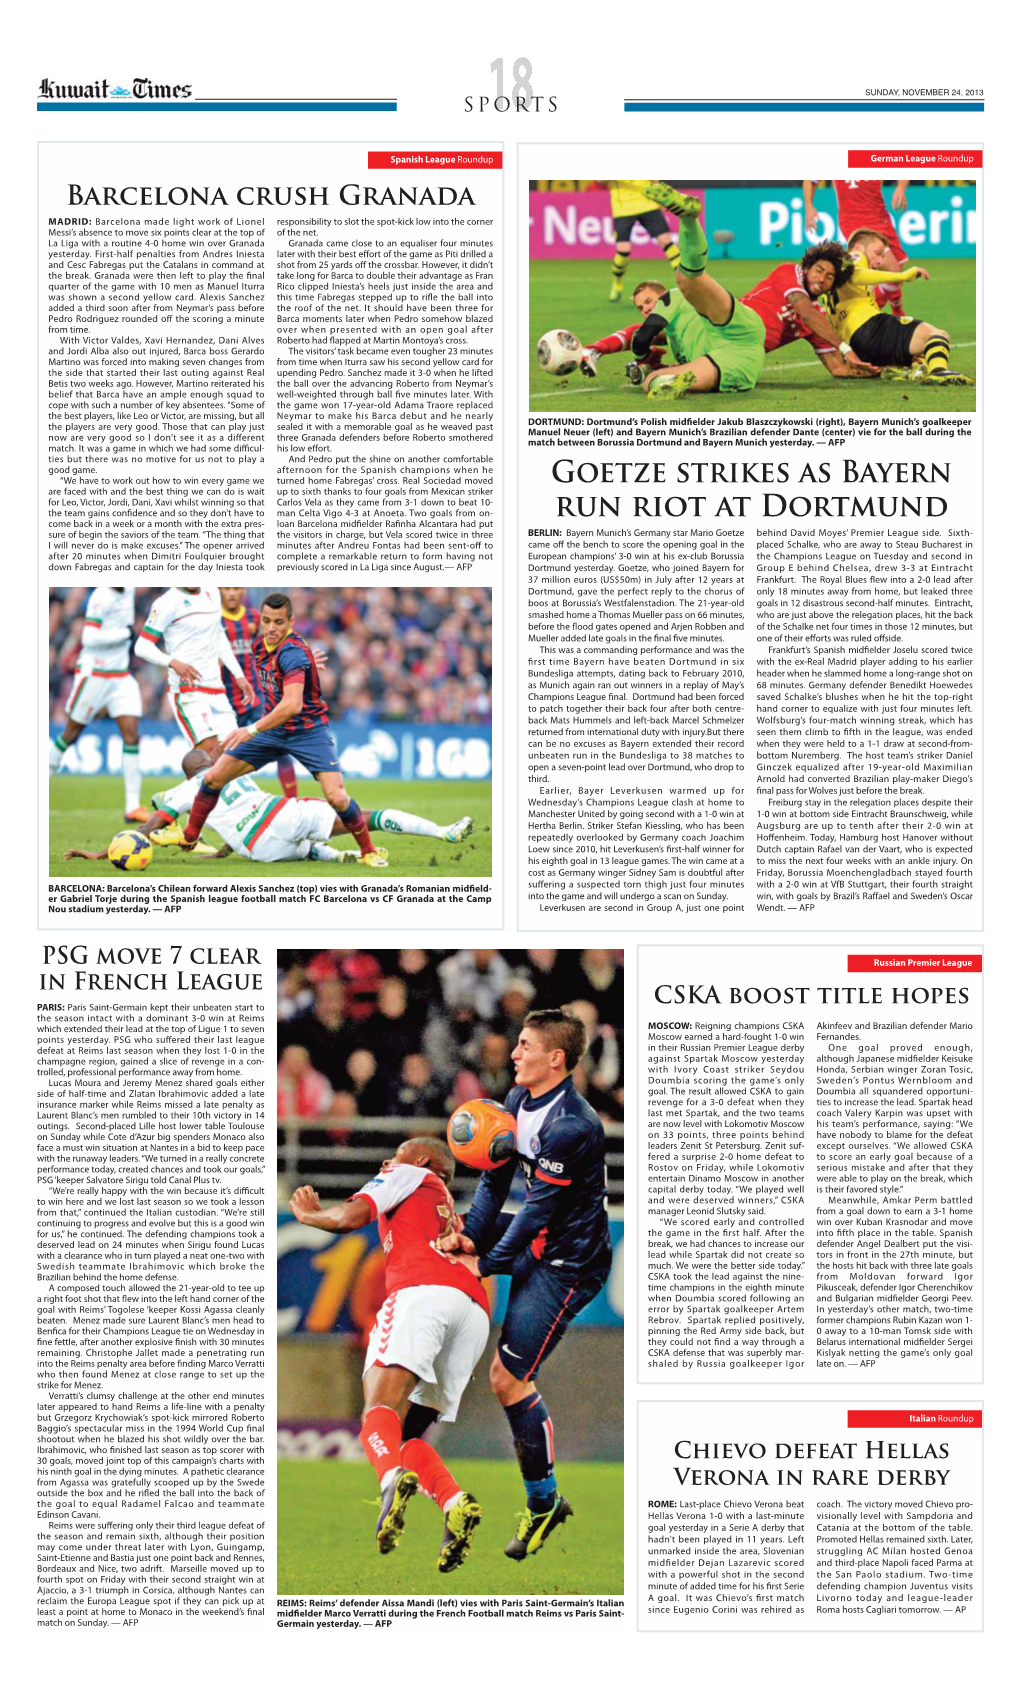 Goetze Strikes As Bayern Run Riot at Dortmund